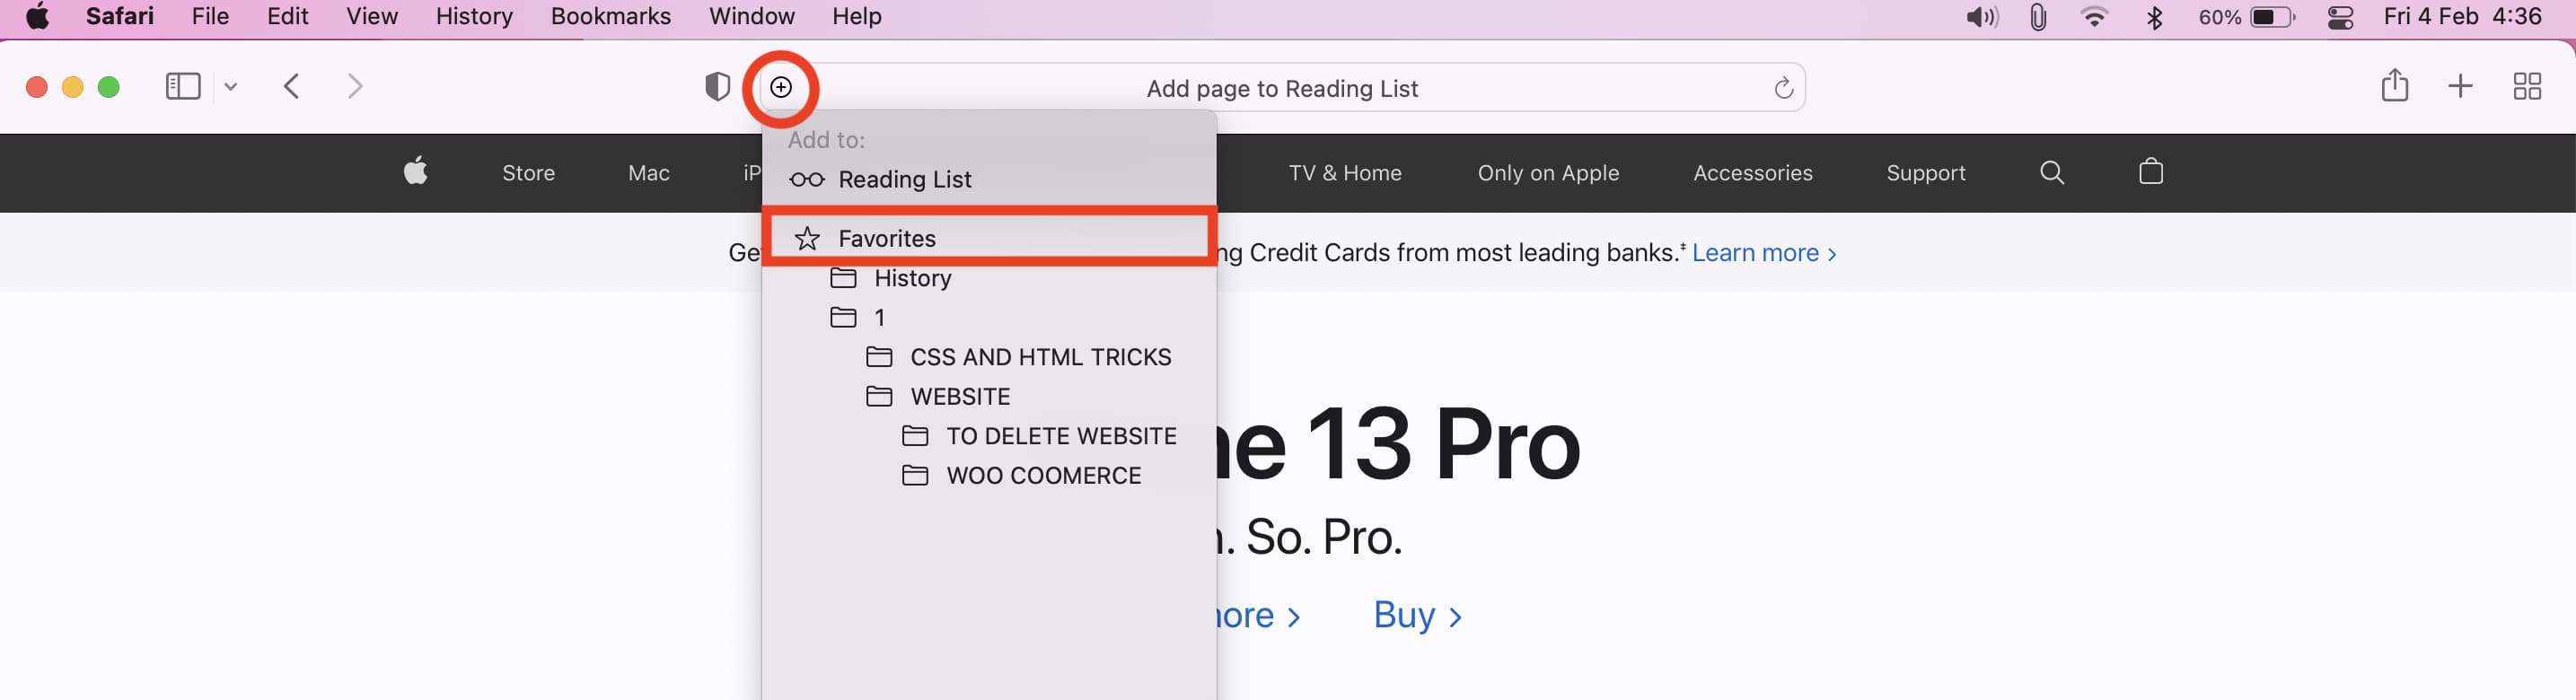 One-step Favorites add button in Safari on Mac